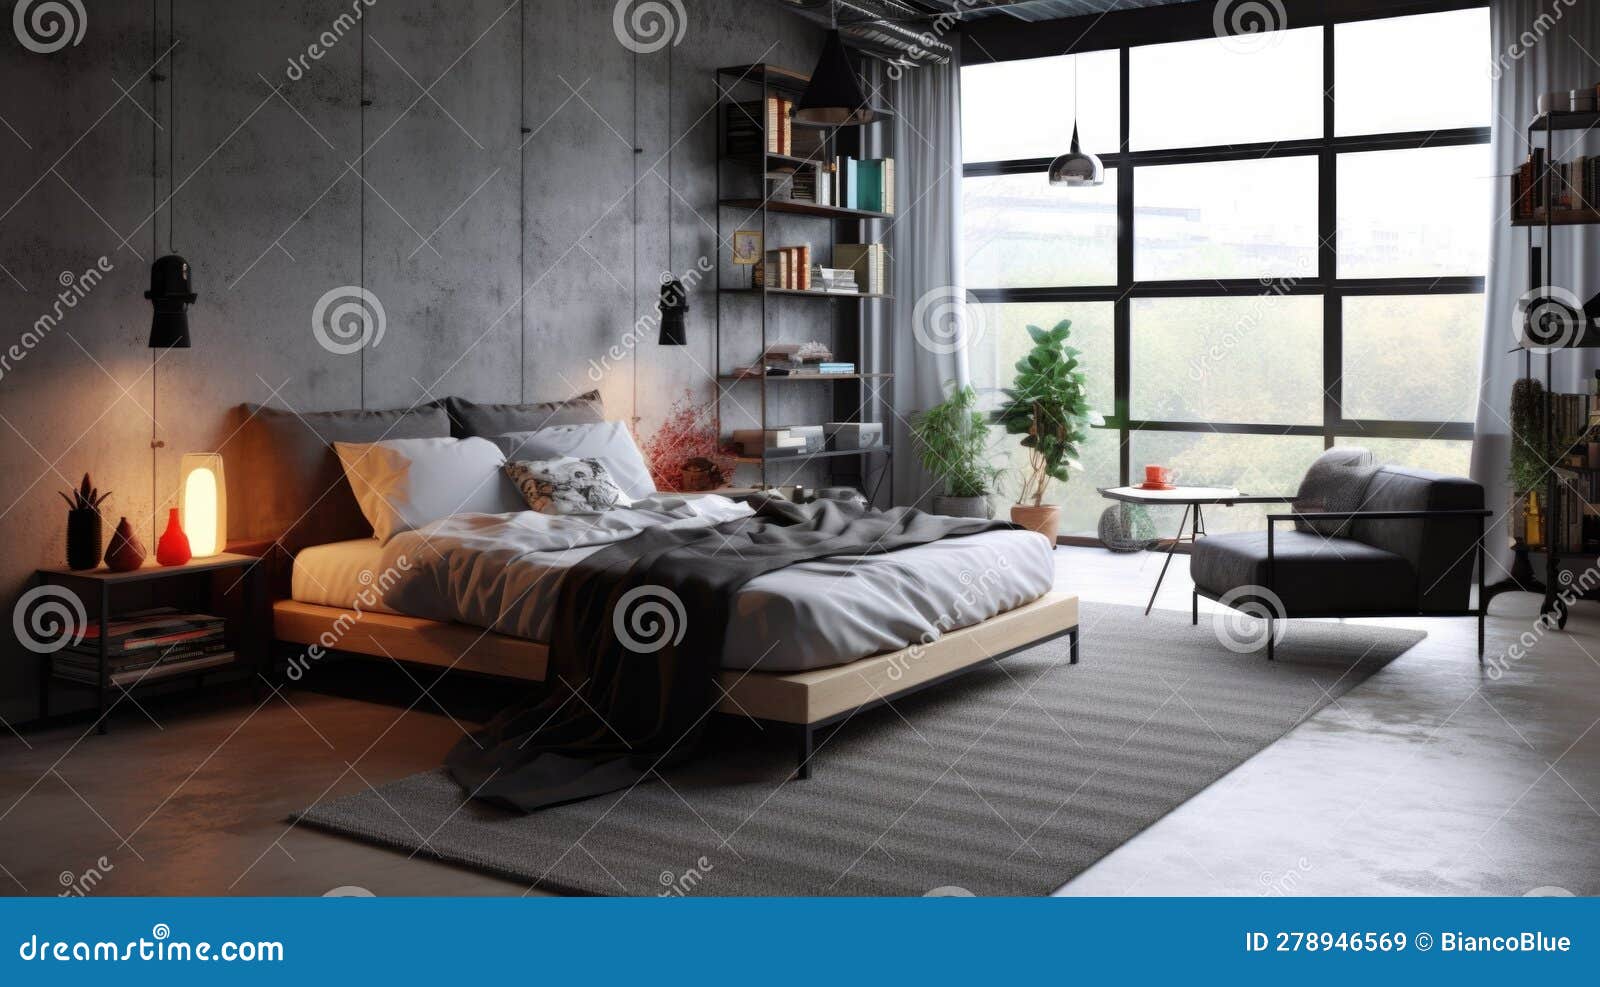 Bedroom Decor, Home Interior Design . Industrial Minimalist Style ...